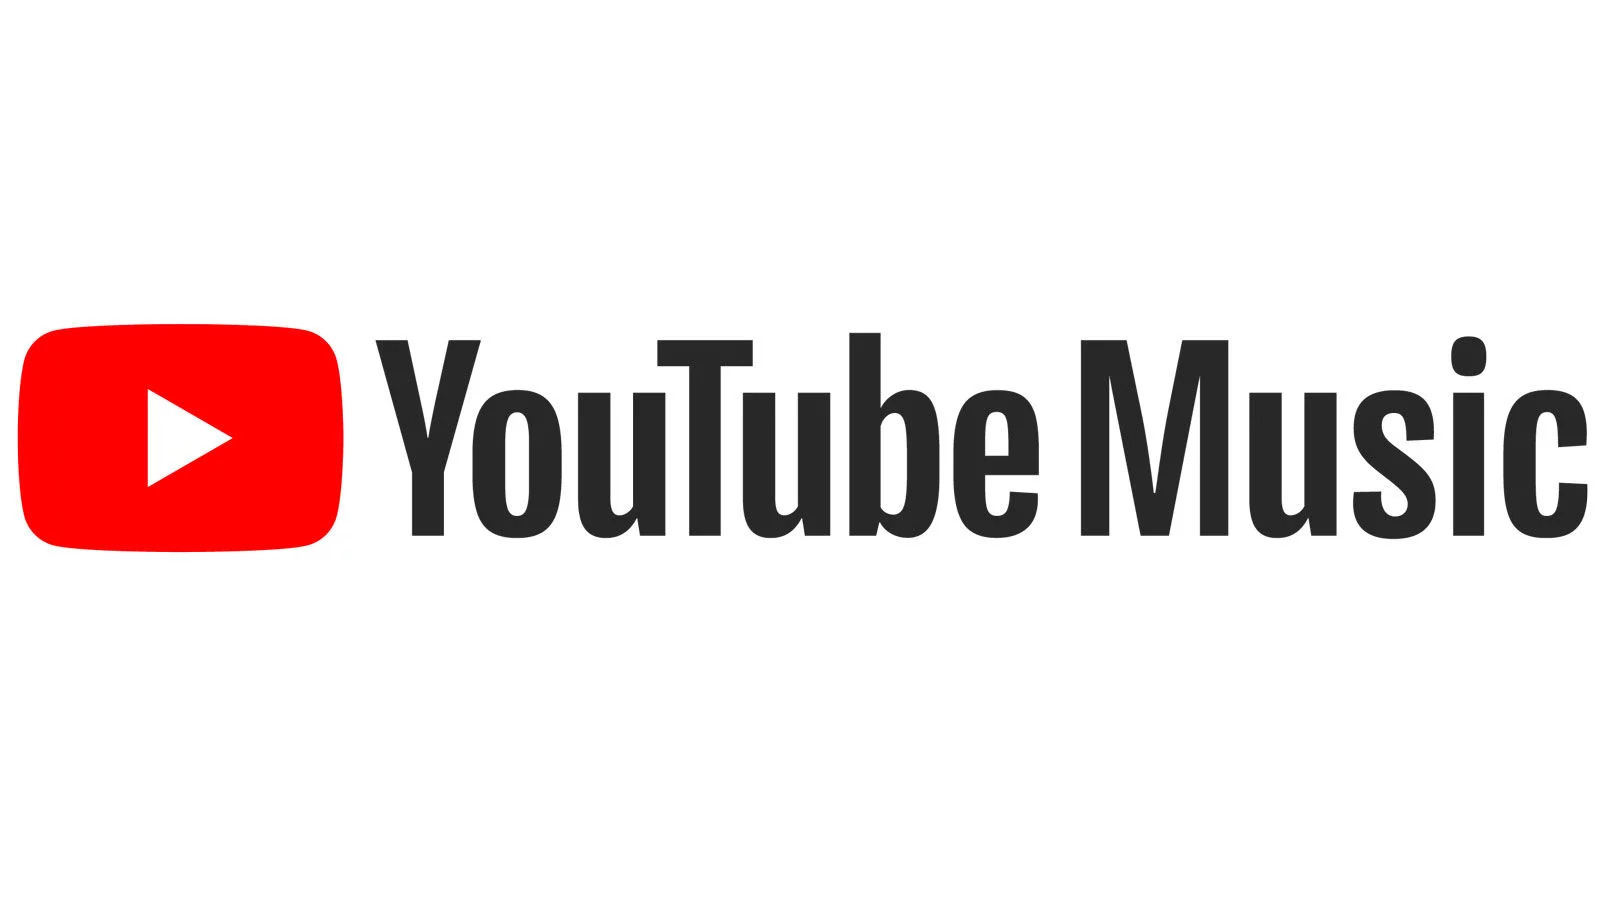 Новая музыка ютуб. Значок ютуб Мьюзик. Логотип youtube Music PNG. Картинка для музыки на ютуб. Ютуб музыка иконка.